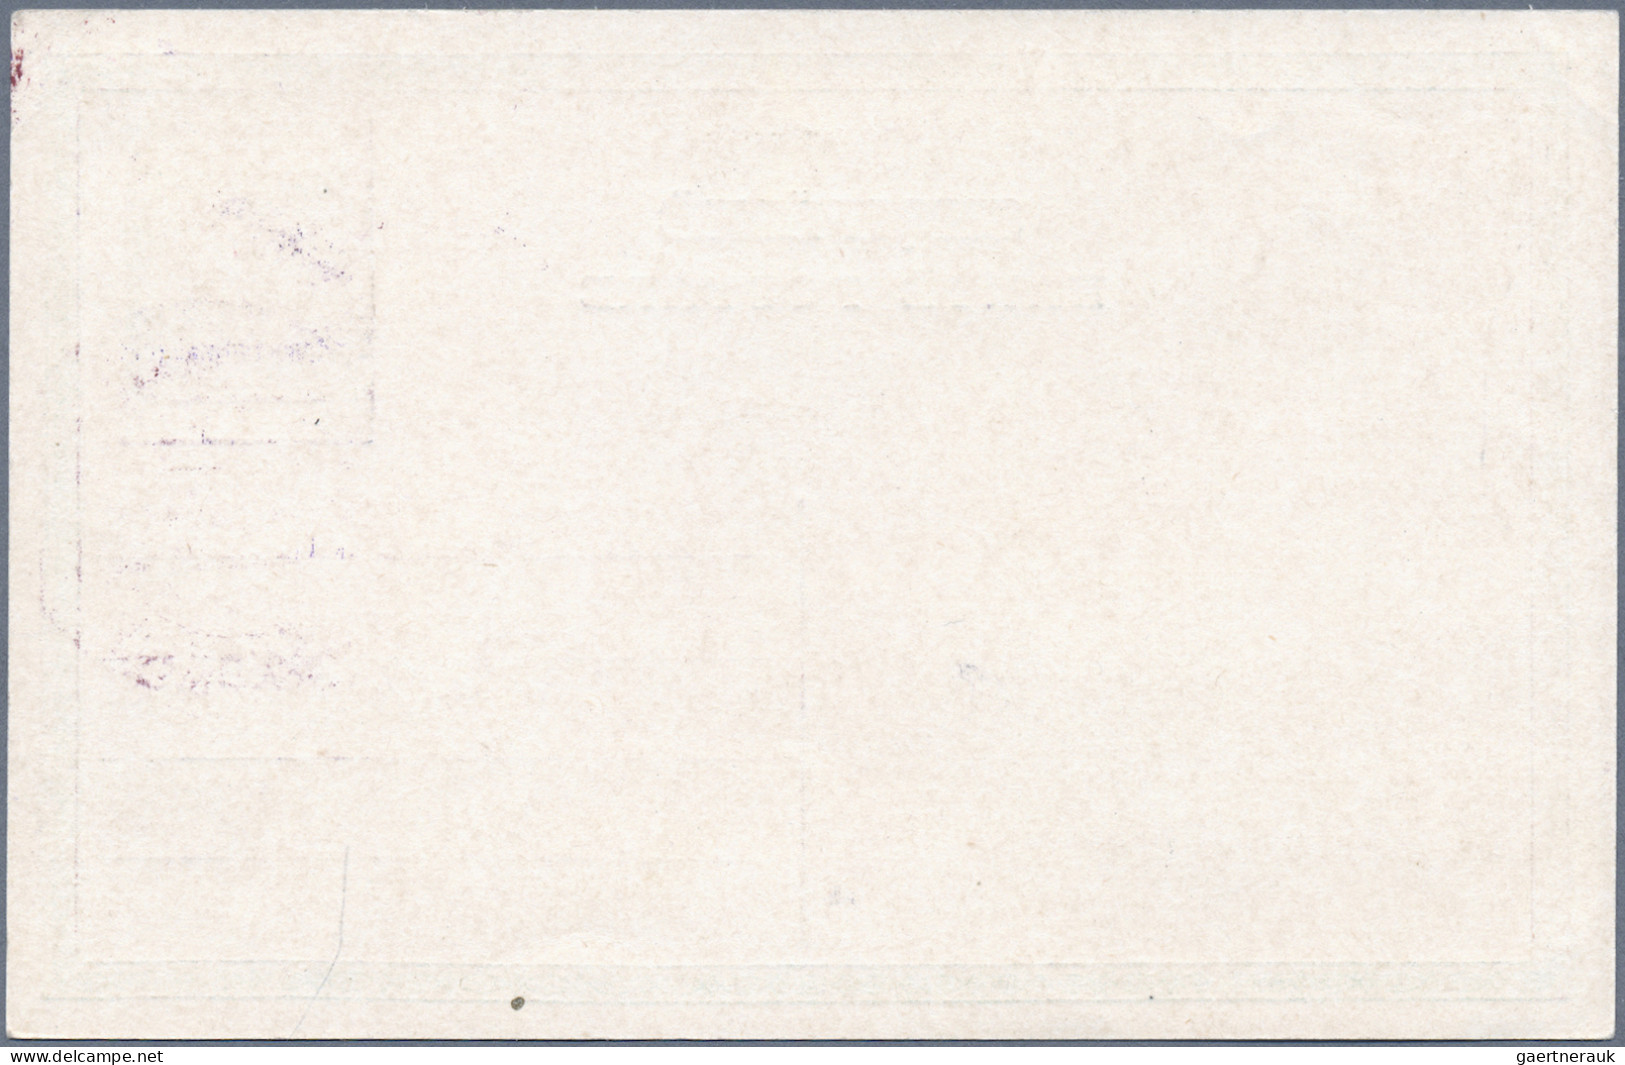 Albania - Postal Stationery: 1914, Prince William Surcharge, Card 5q. Green Clea - Albanië